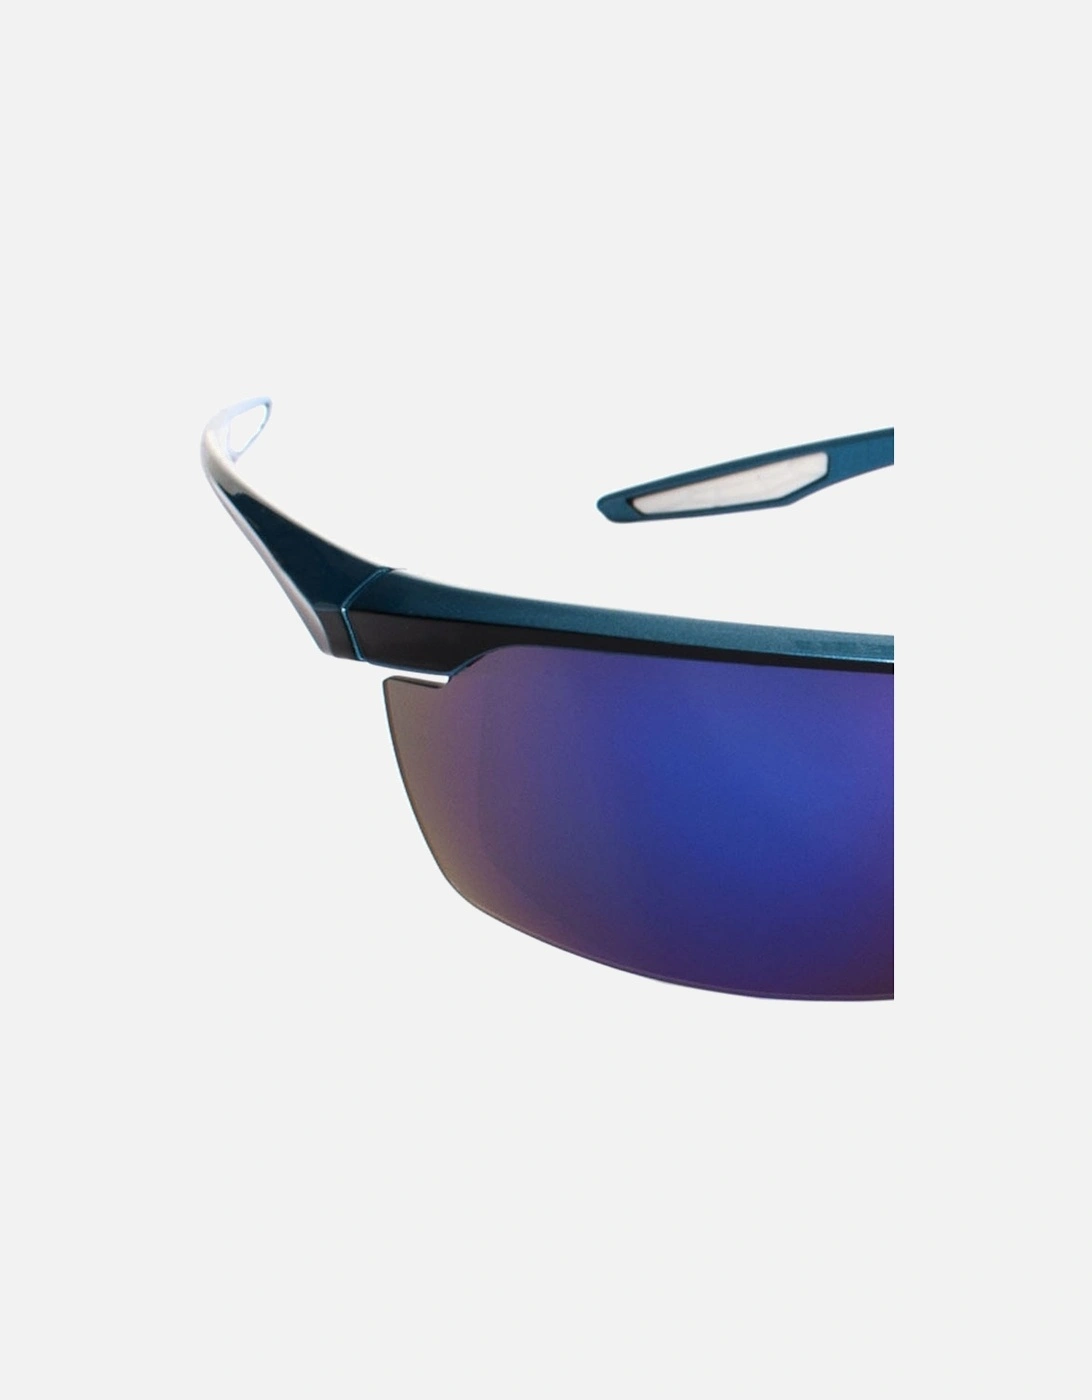 Adults Unisex Hinter Blue Mirror Sunglasses